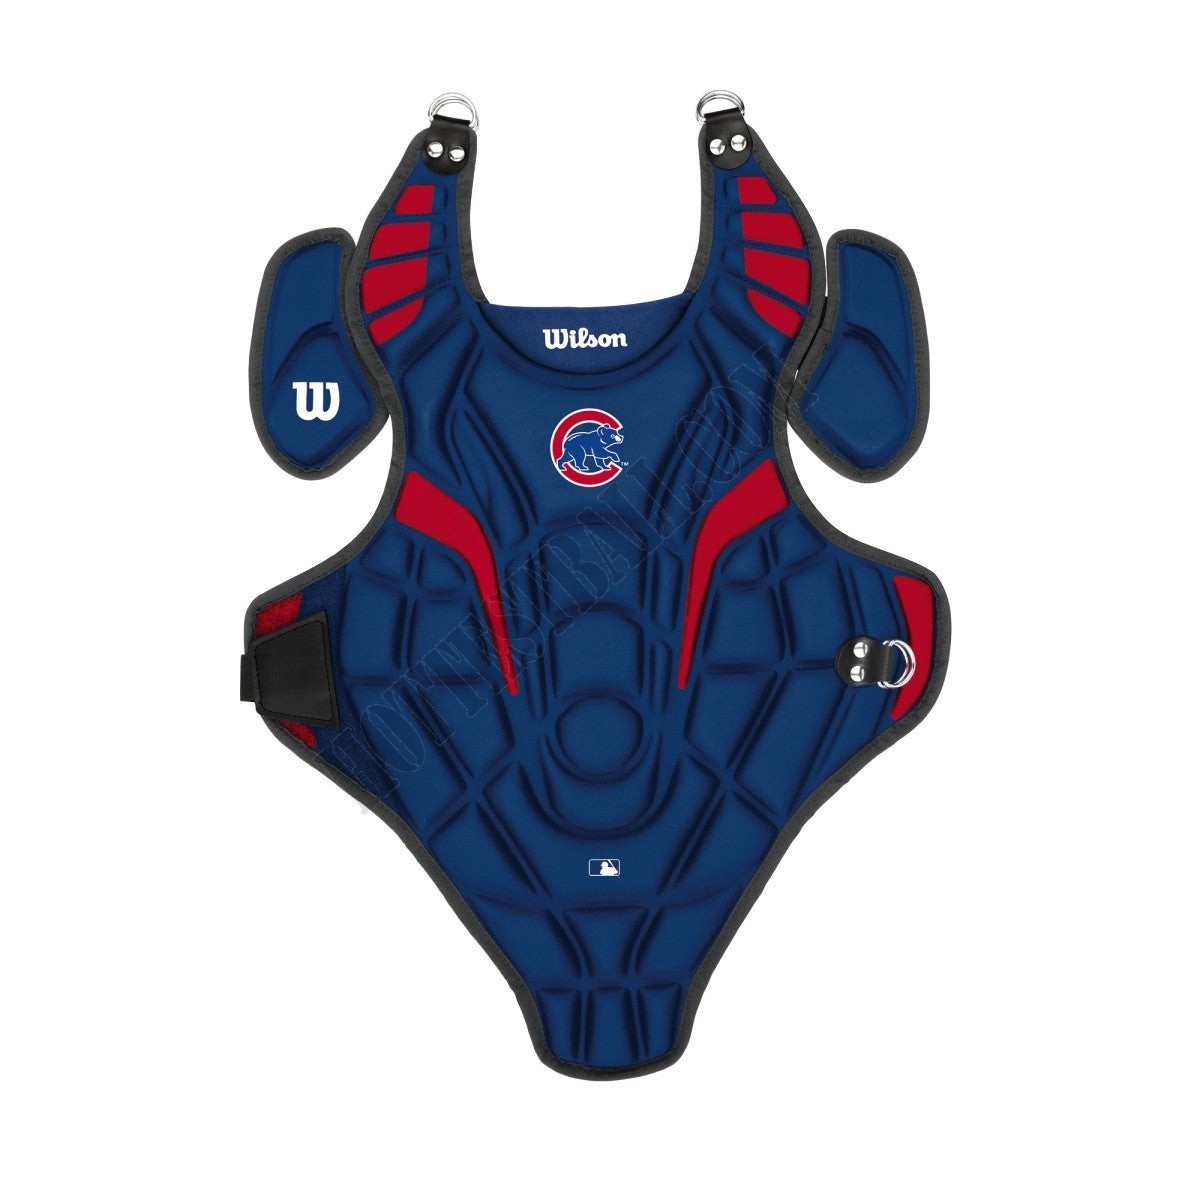 EZ Gear Catcher's Kit - Chicago Cubs - Wilson Discount Store - EZ Gear Catcher's Kit - Chicago Cubs - Wilson Discount Store